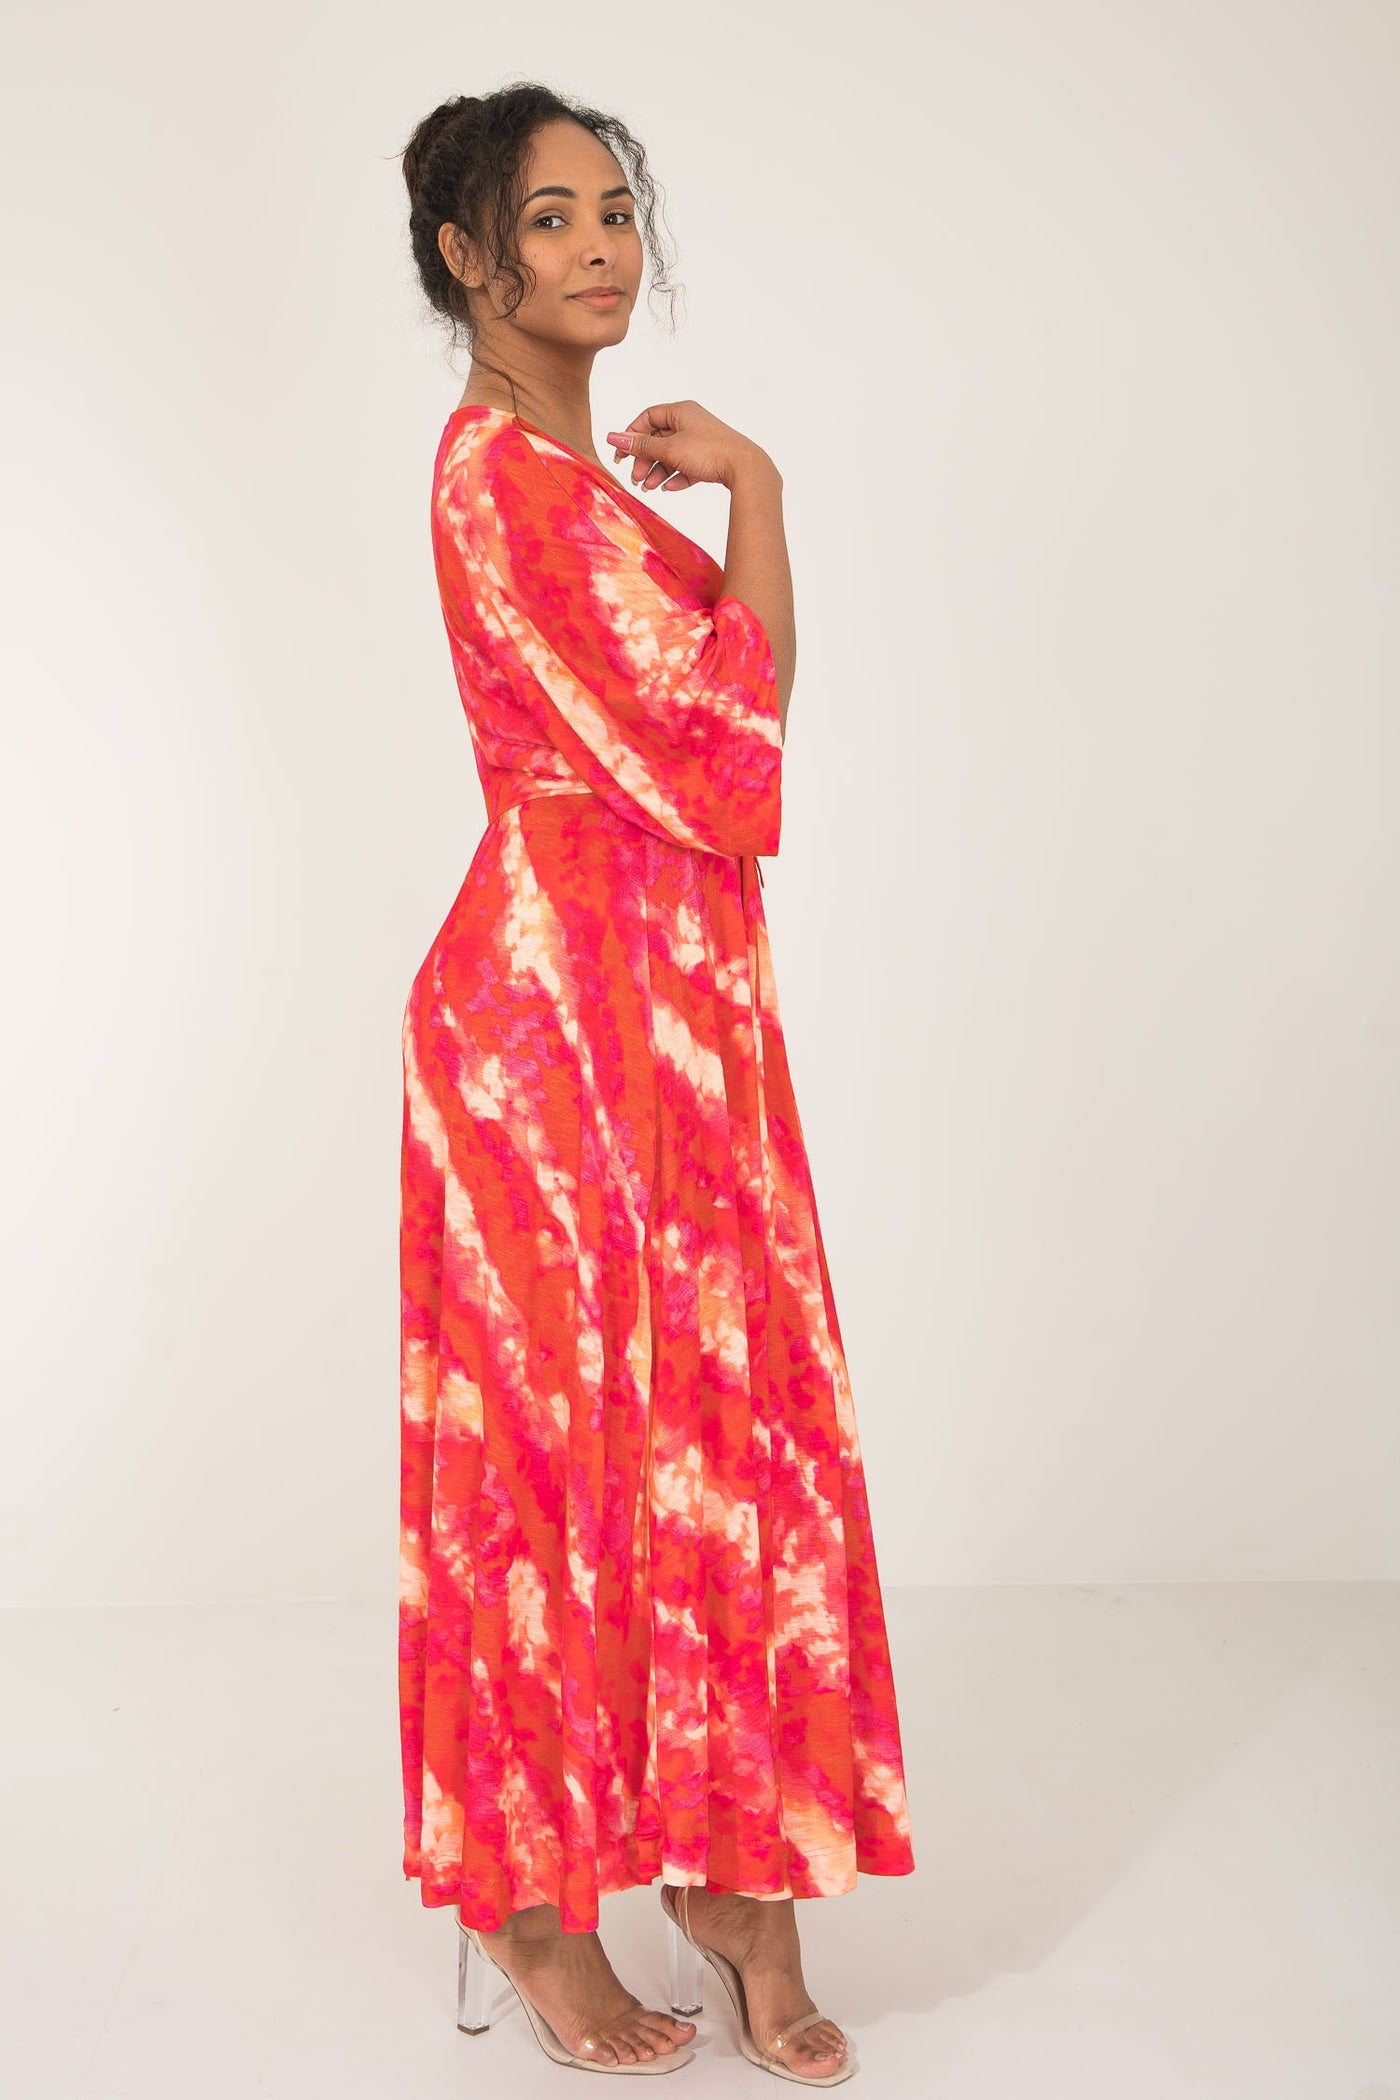 To wear everywhere long jersey dress - Coral Batik - Ankellång klänning i trikå